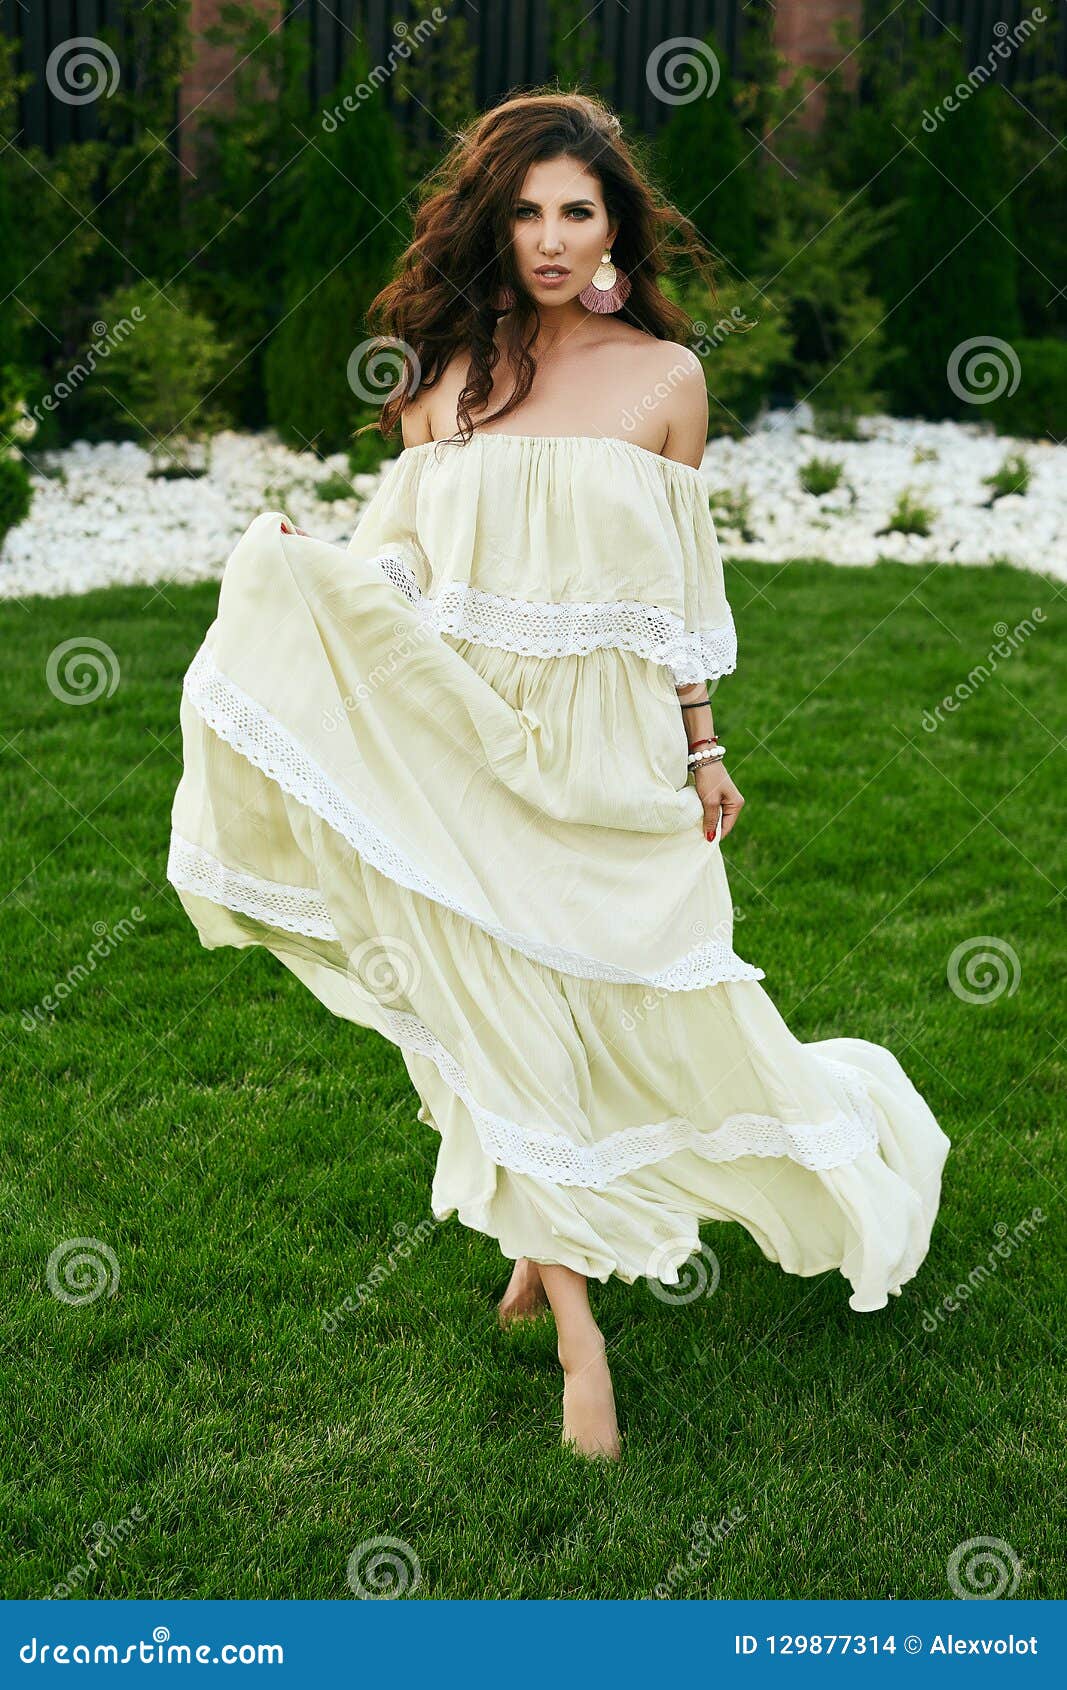 Sensual Brunette Model in Fashion Dress Posing in Garden Stock Photo ...